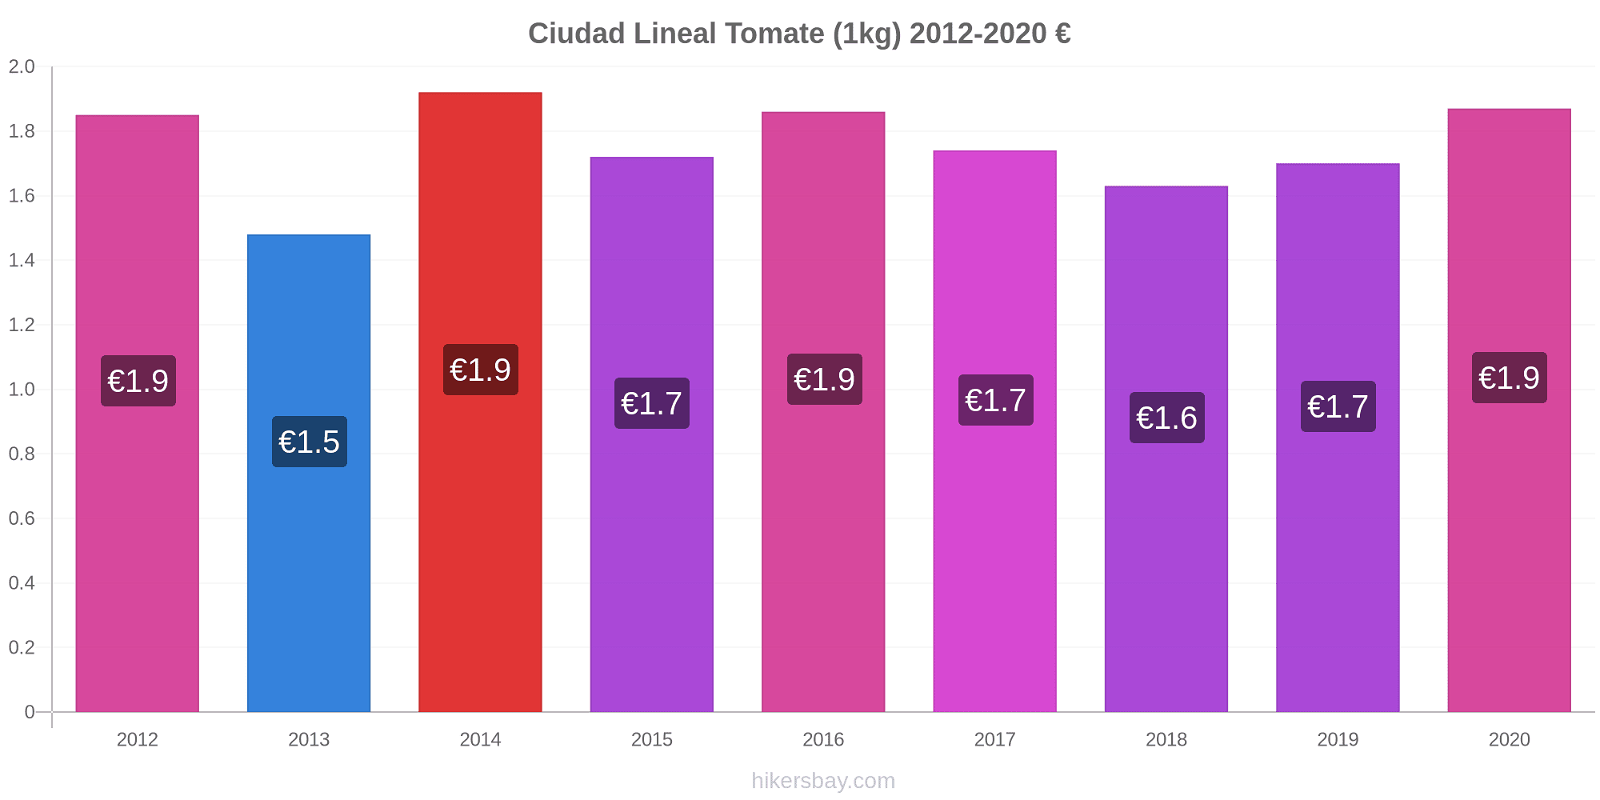 Ciudad Lineal changements de prix Tomate (1kg) hikersbay.com